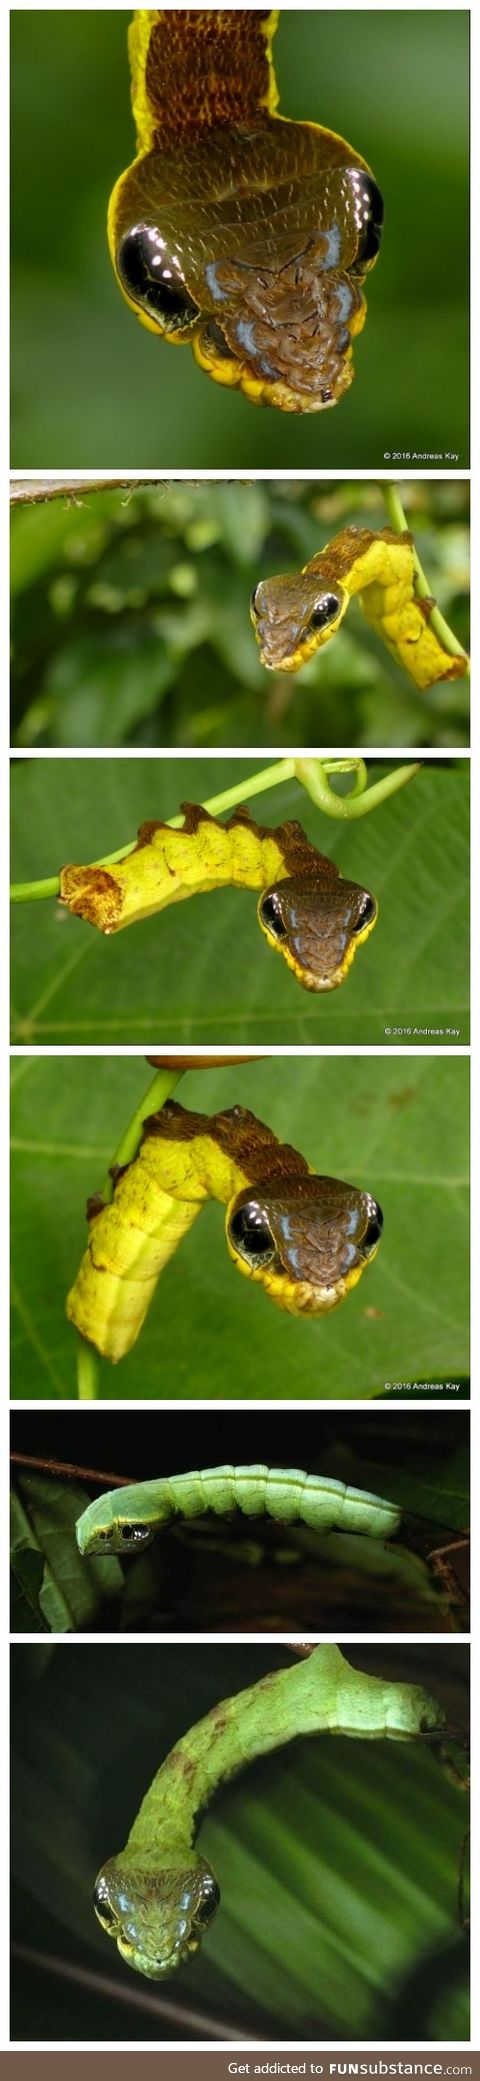 Caterpillars that mimic Snakes